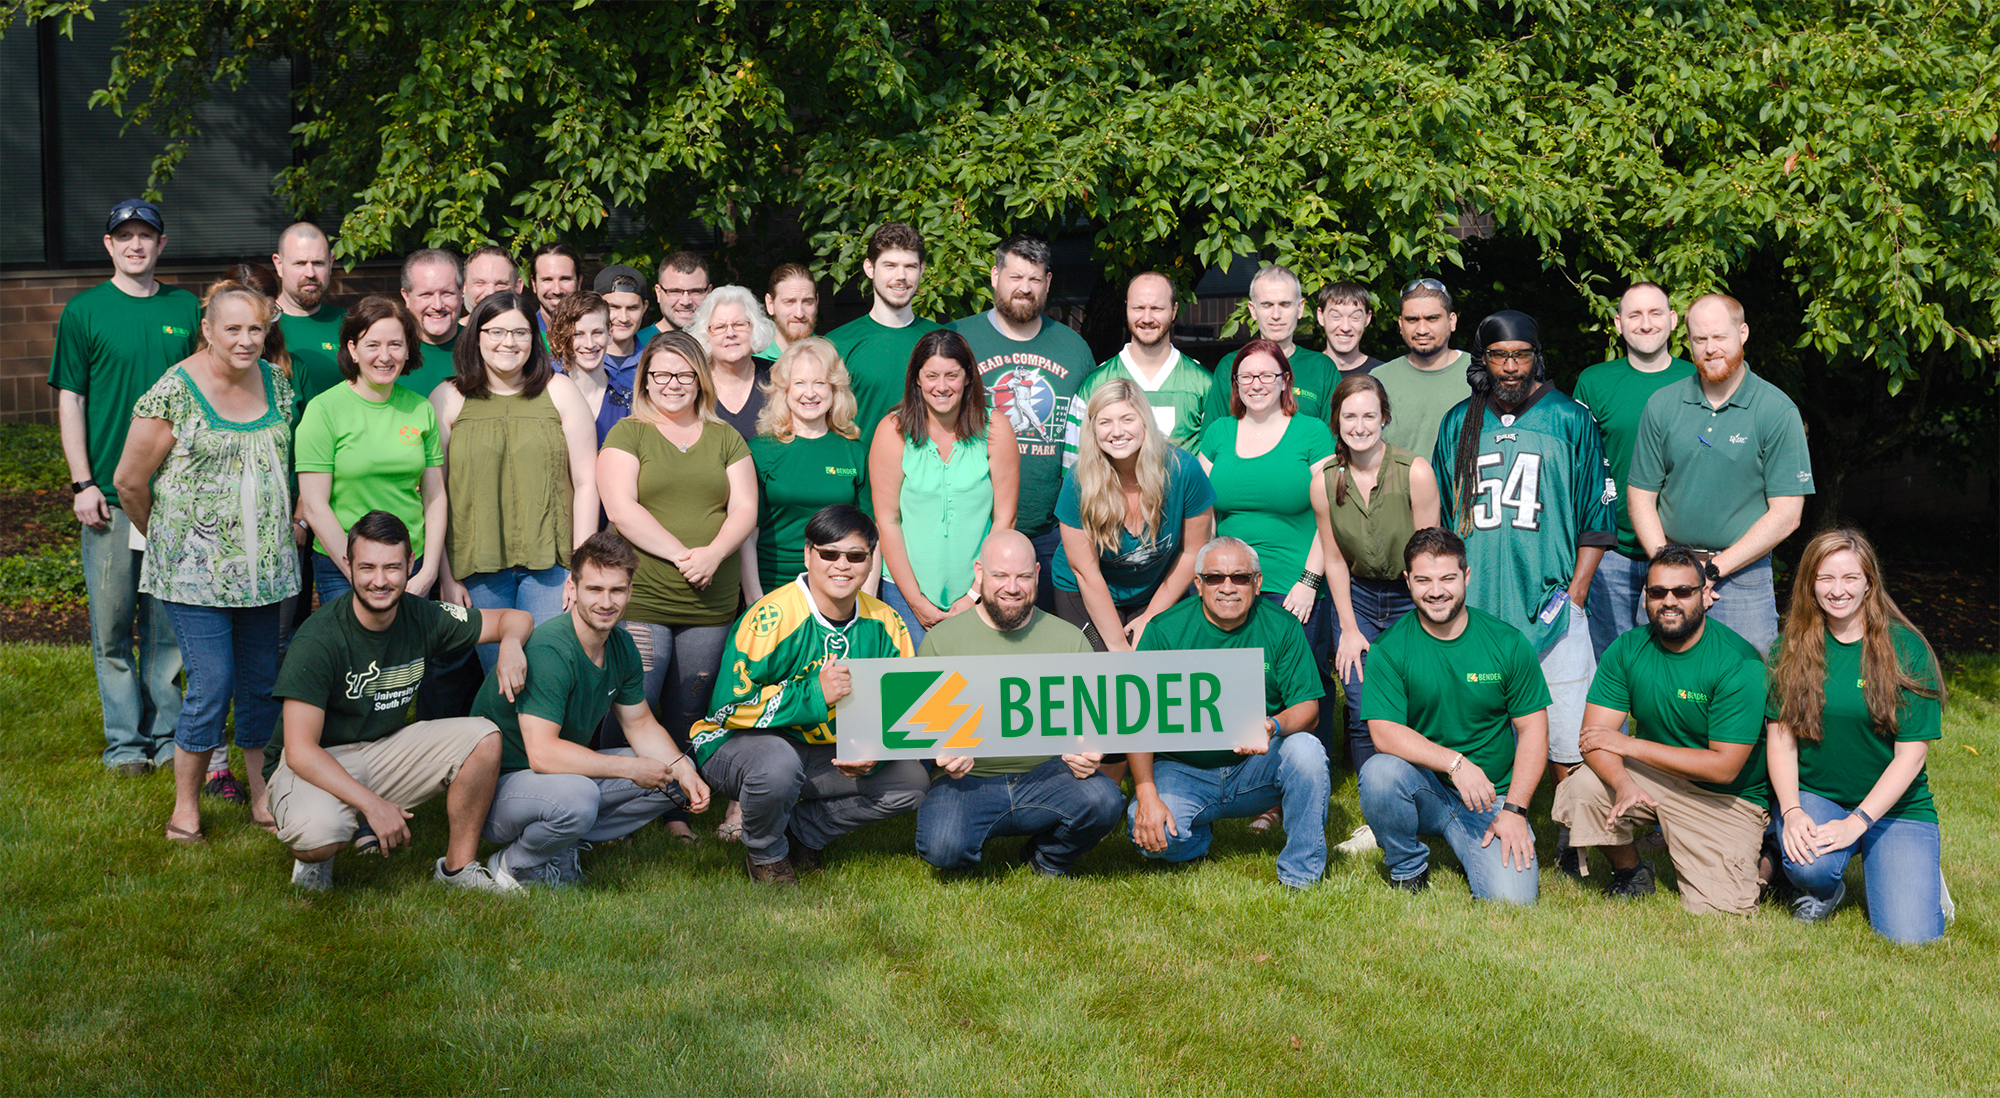 Bender Inc. team celebrating!